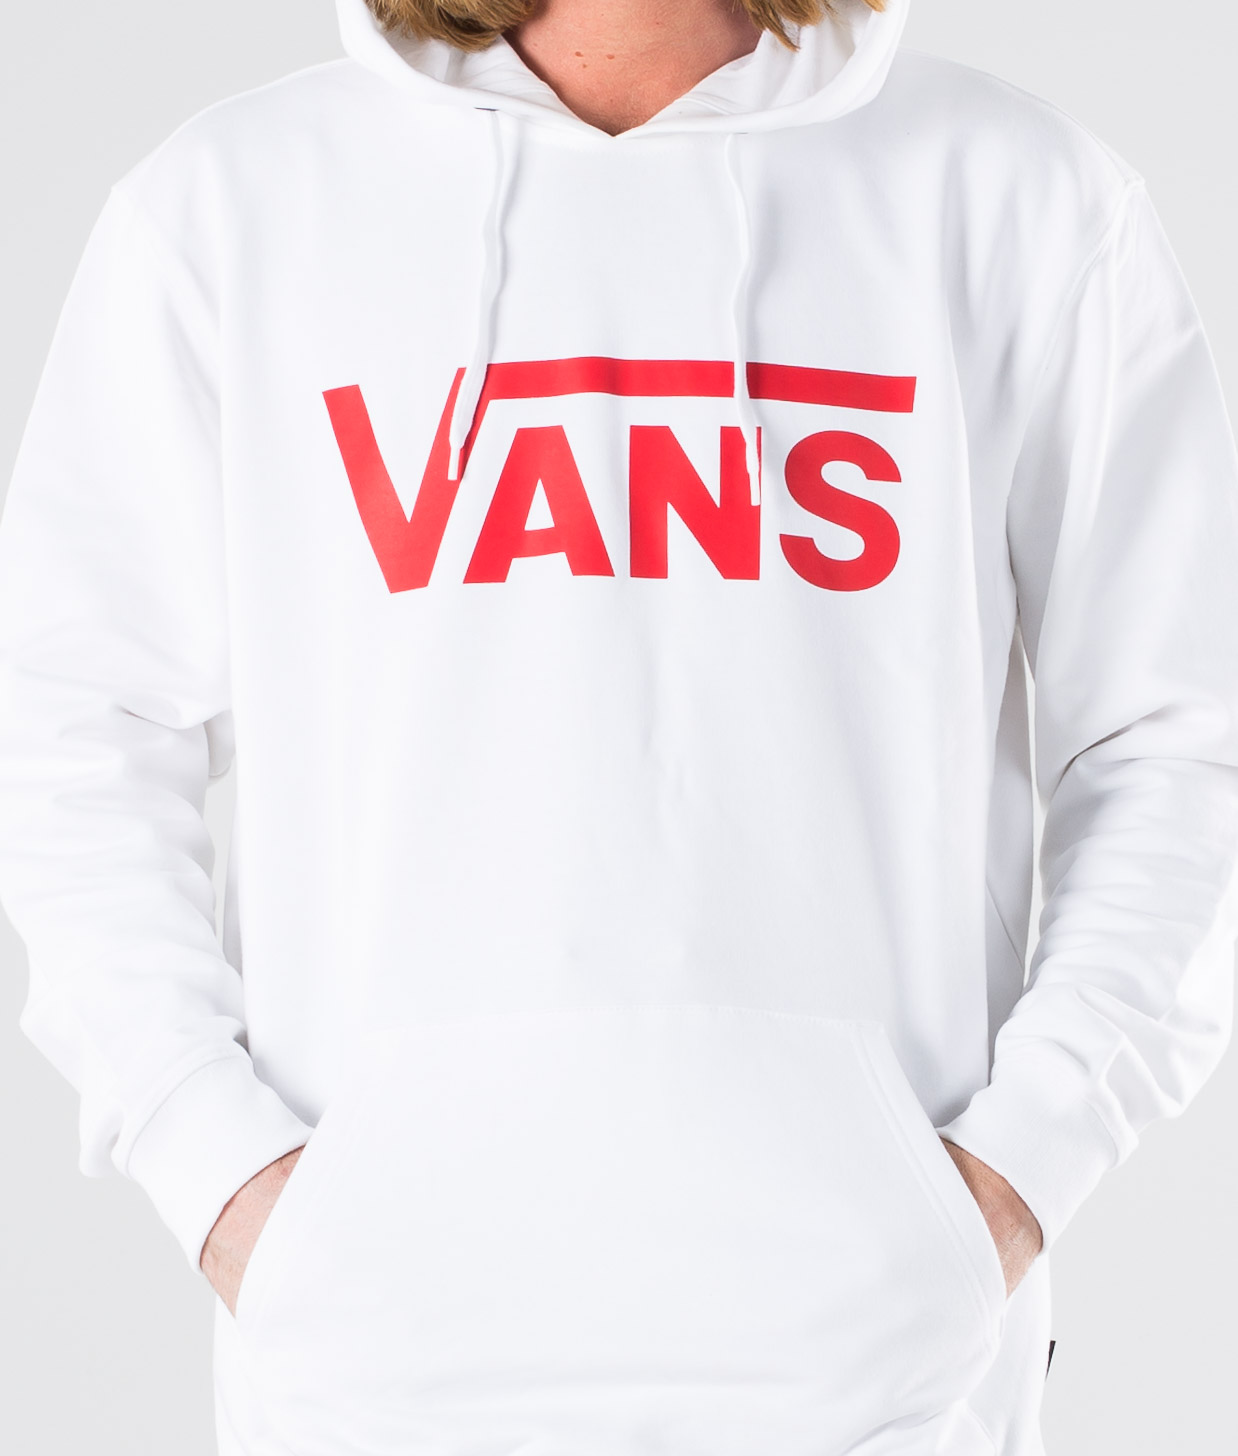 vans hoodie white and red